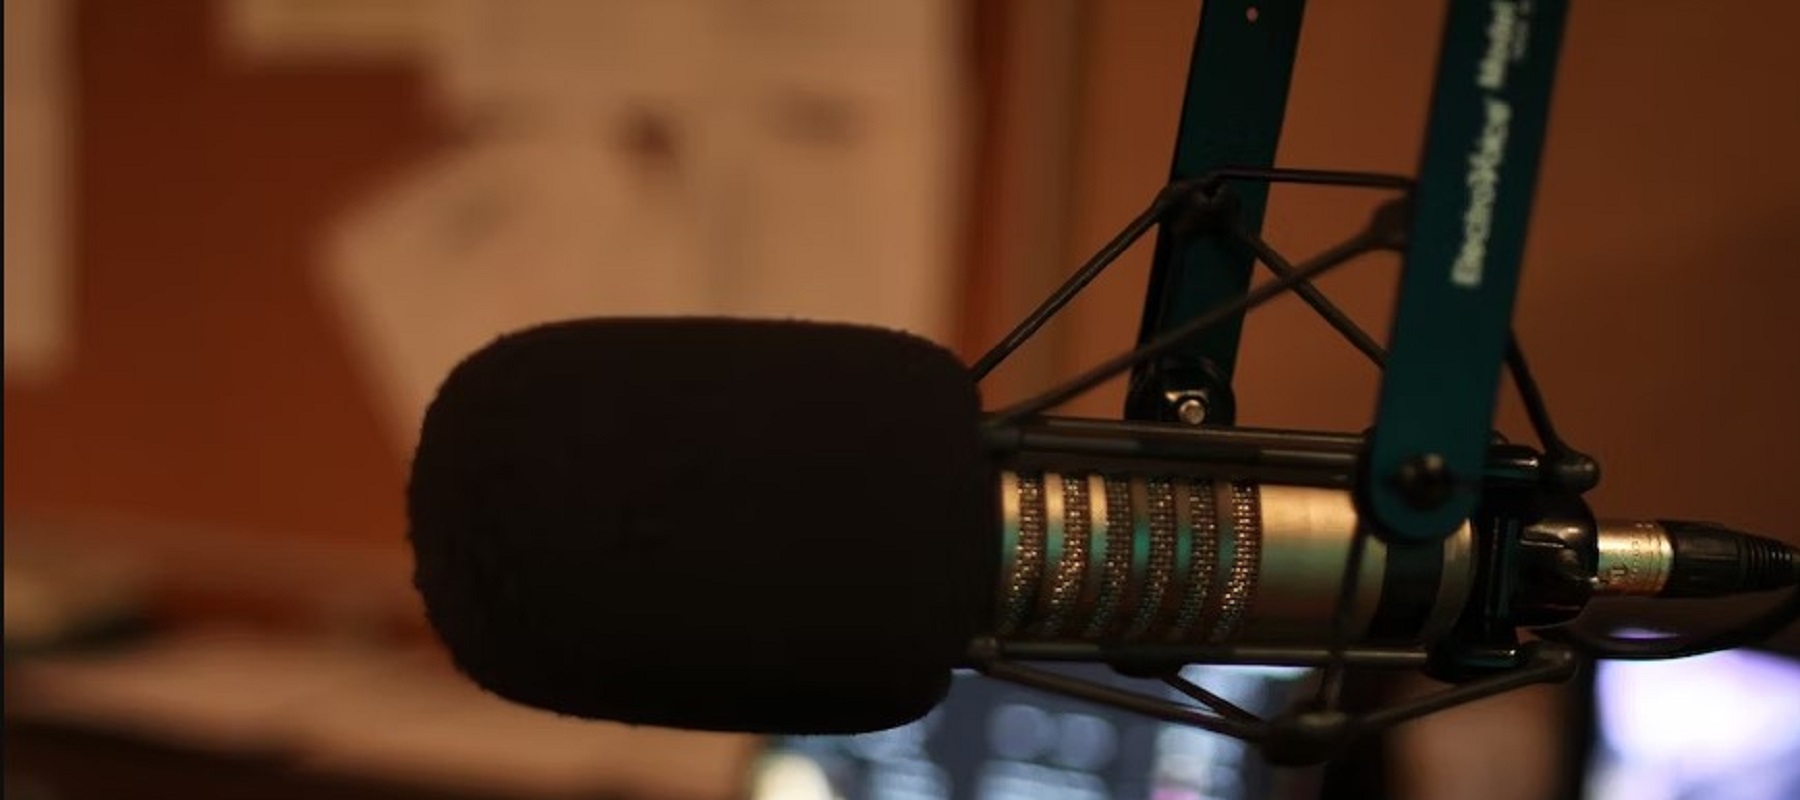 Global radio station market to reach $87.31 billion in 2023, report